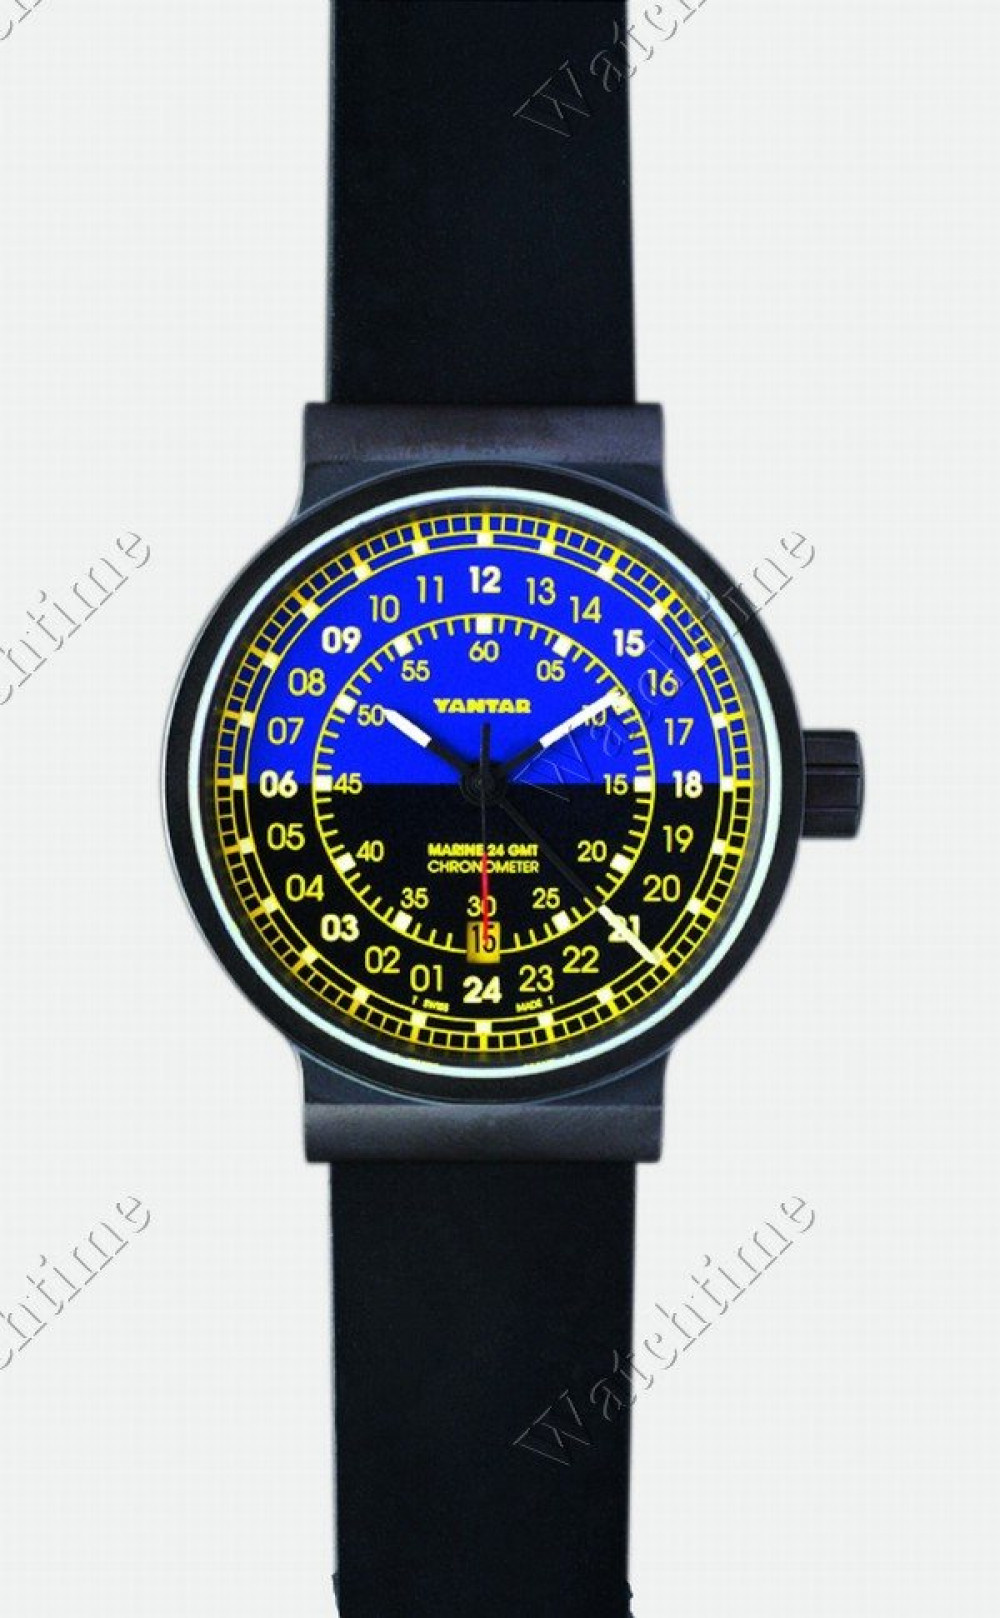 Zegarek firmy Yantar, model Marine 24 GMT Chronometer